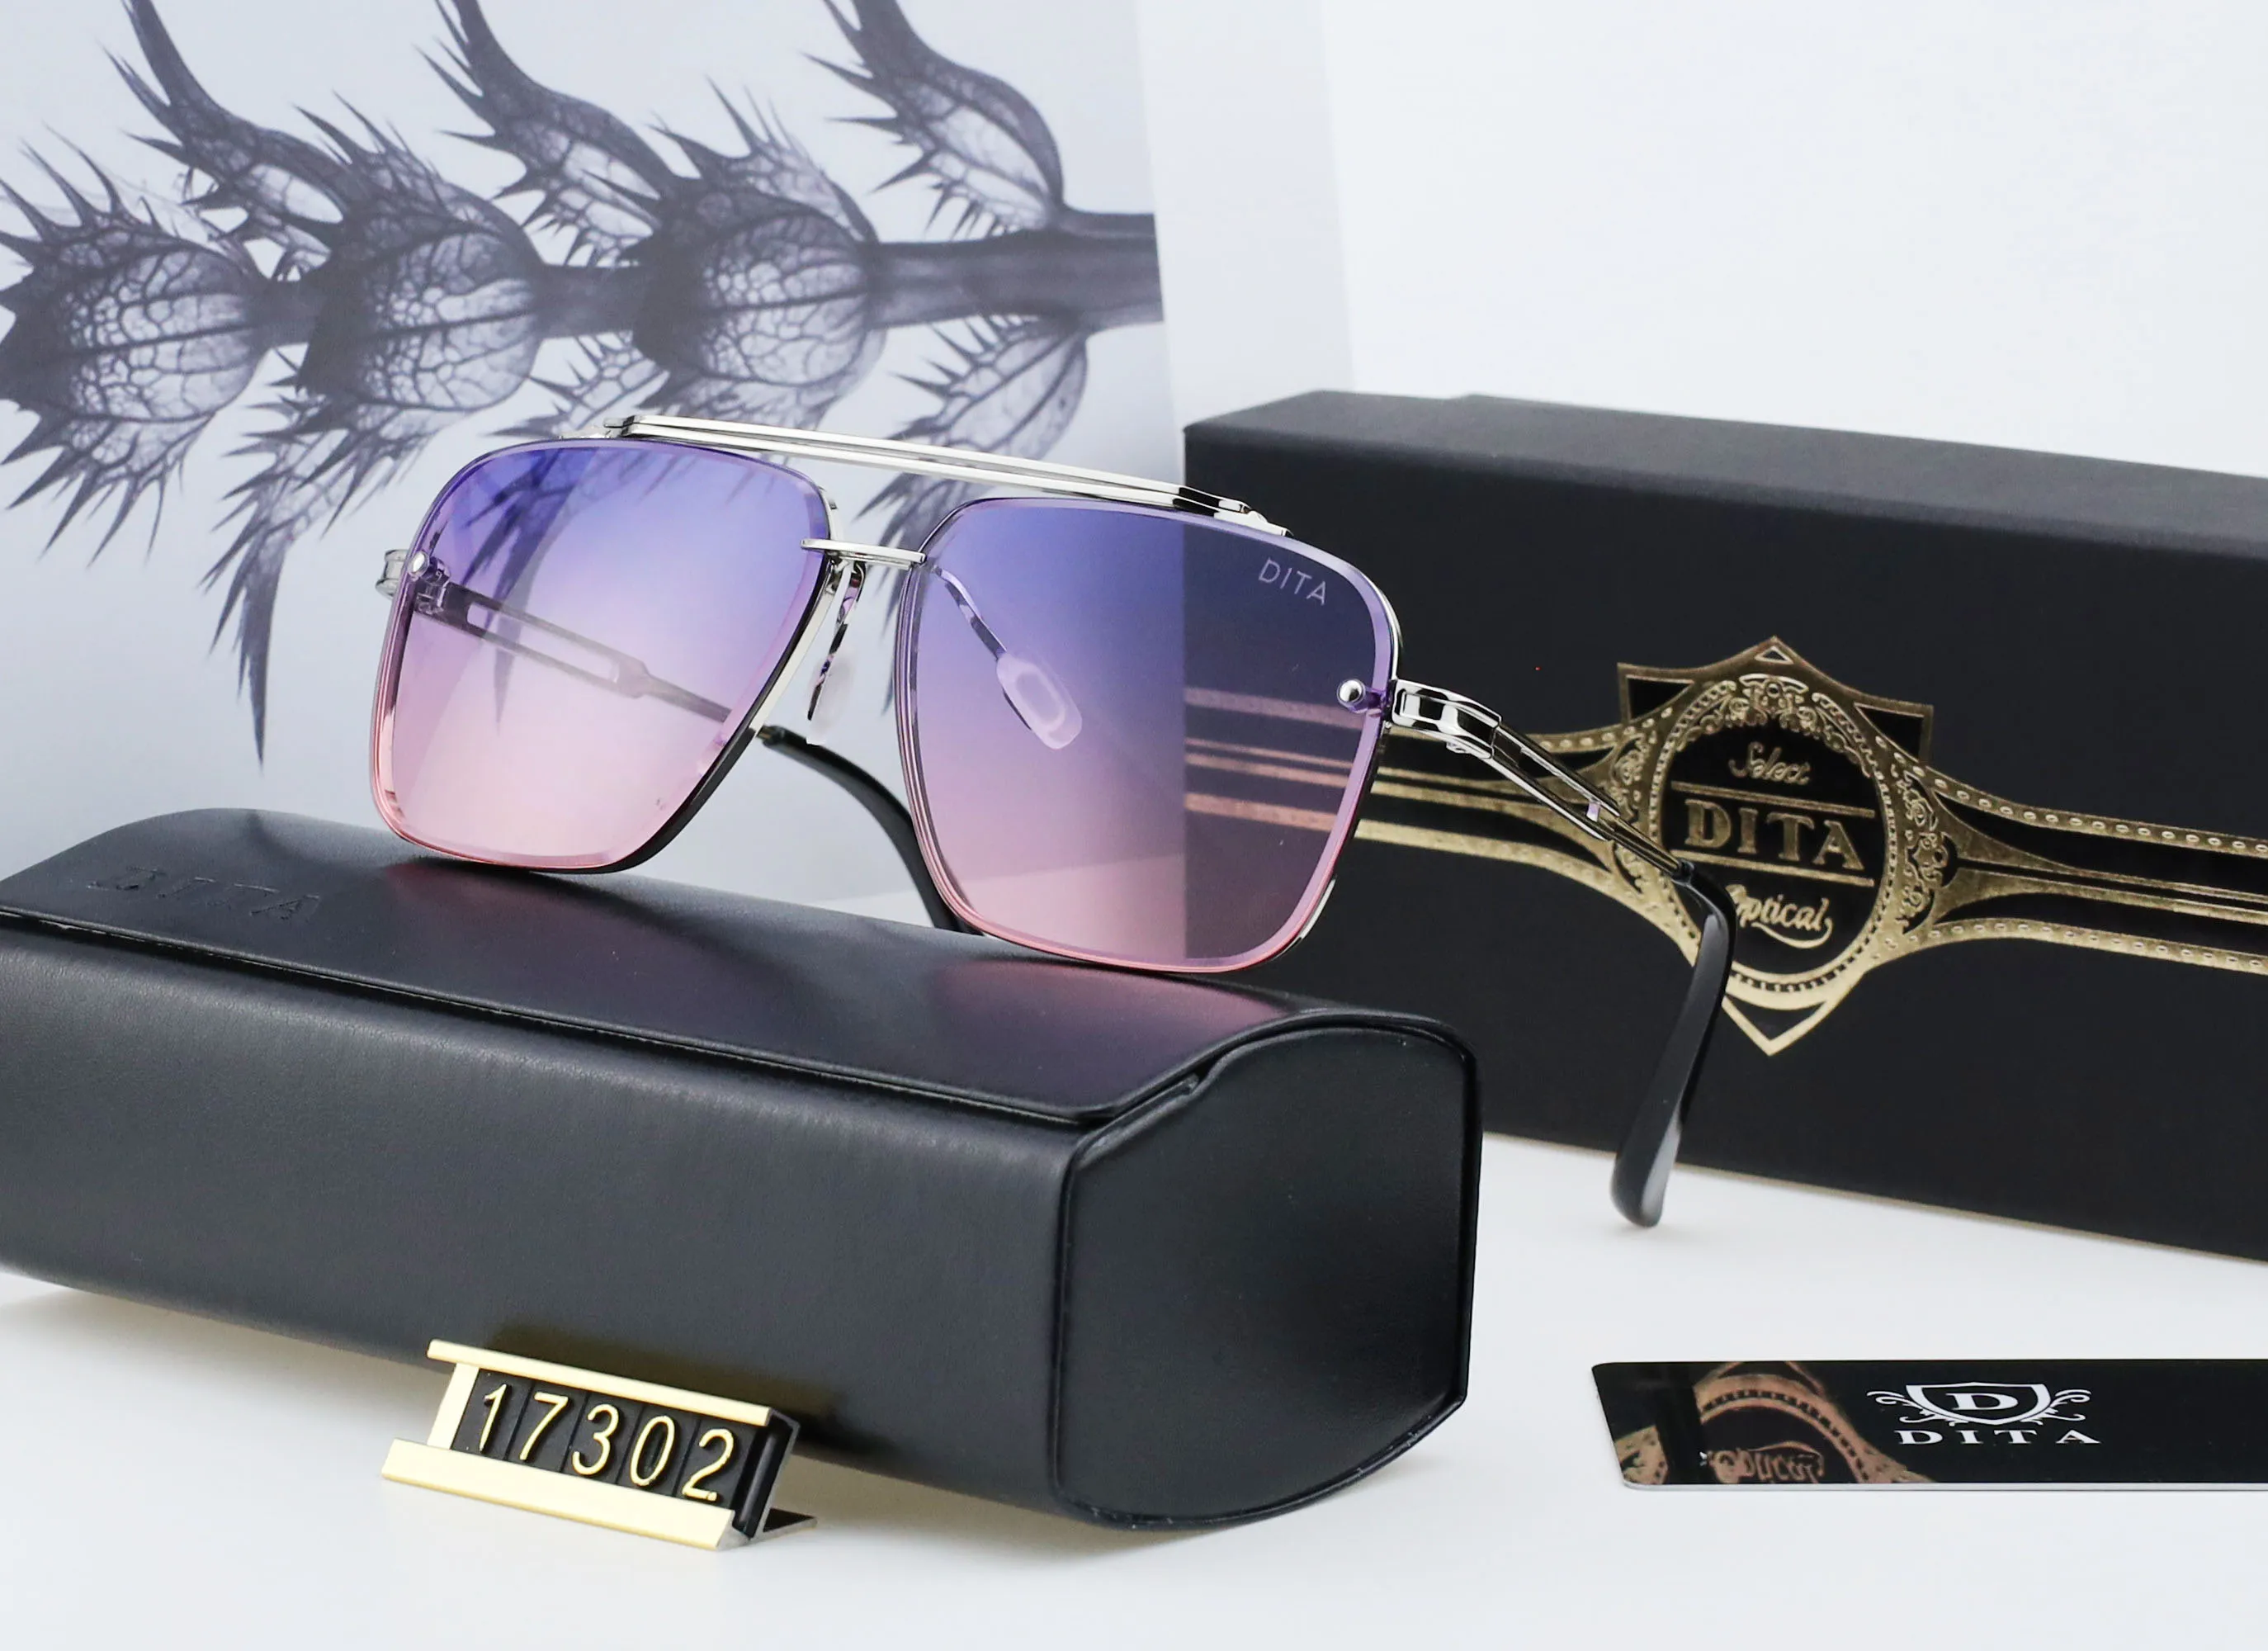 Men's Sunglasses - Buy Men's Sunglasses Online Starting at Just ₹51 | Meesho